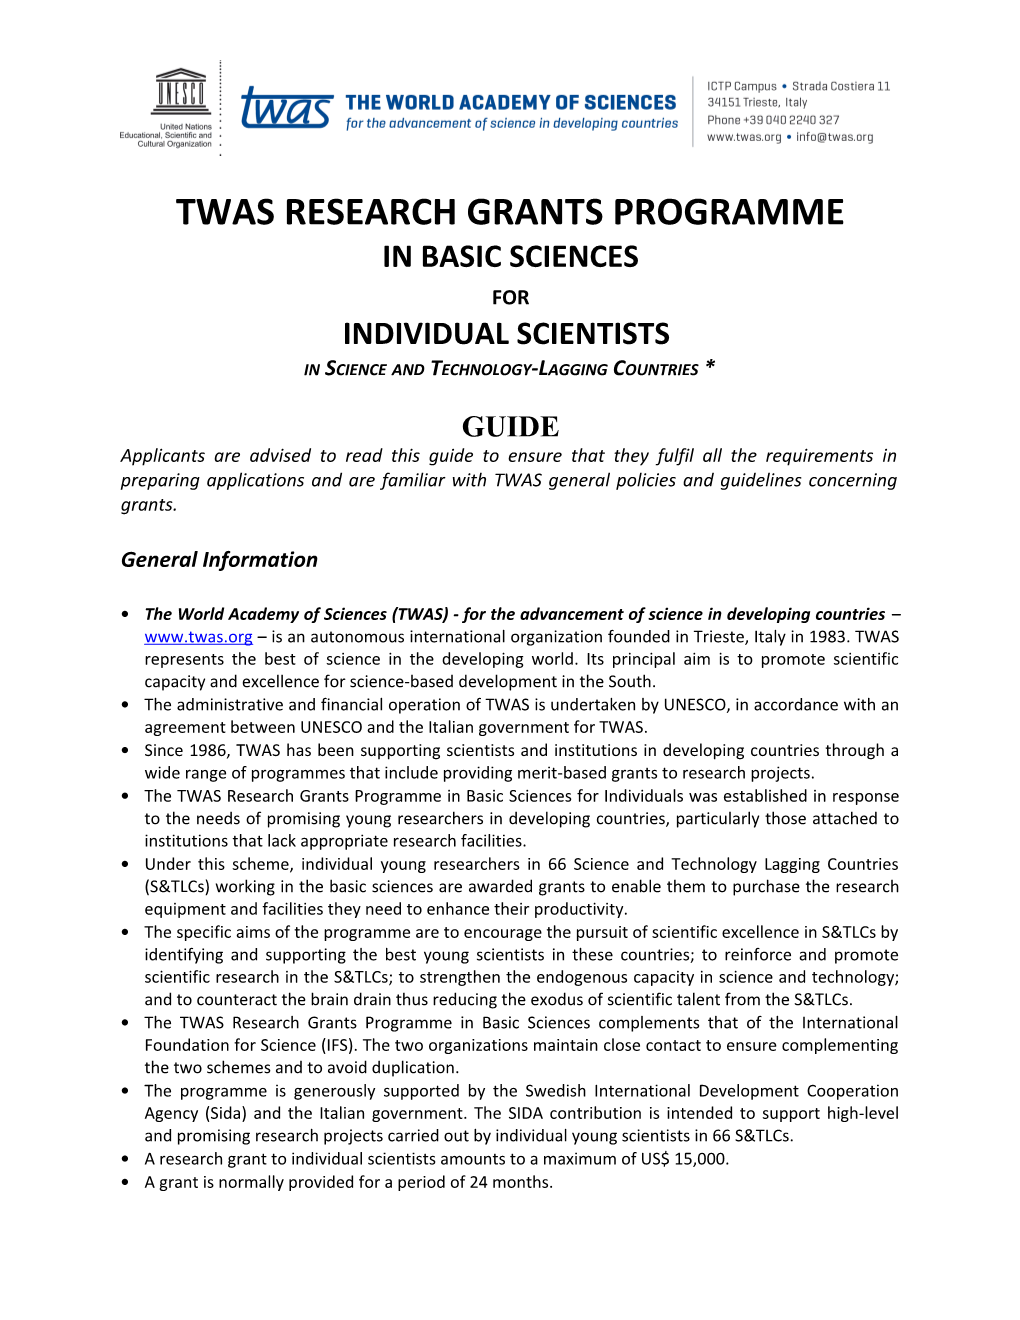 Twas Research Grants Programme